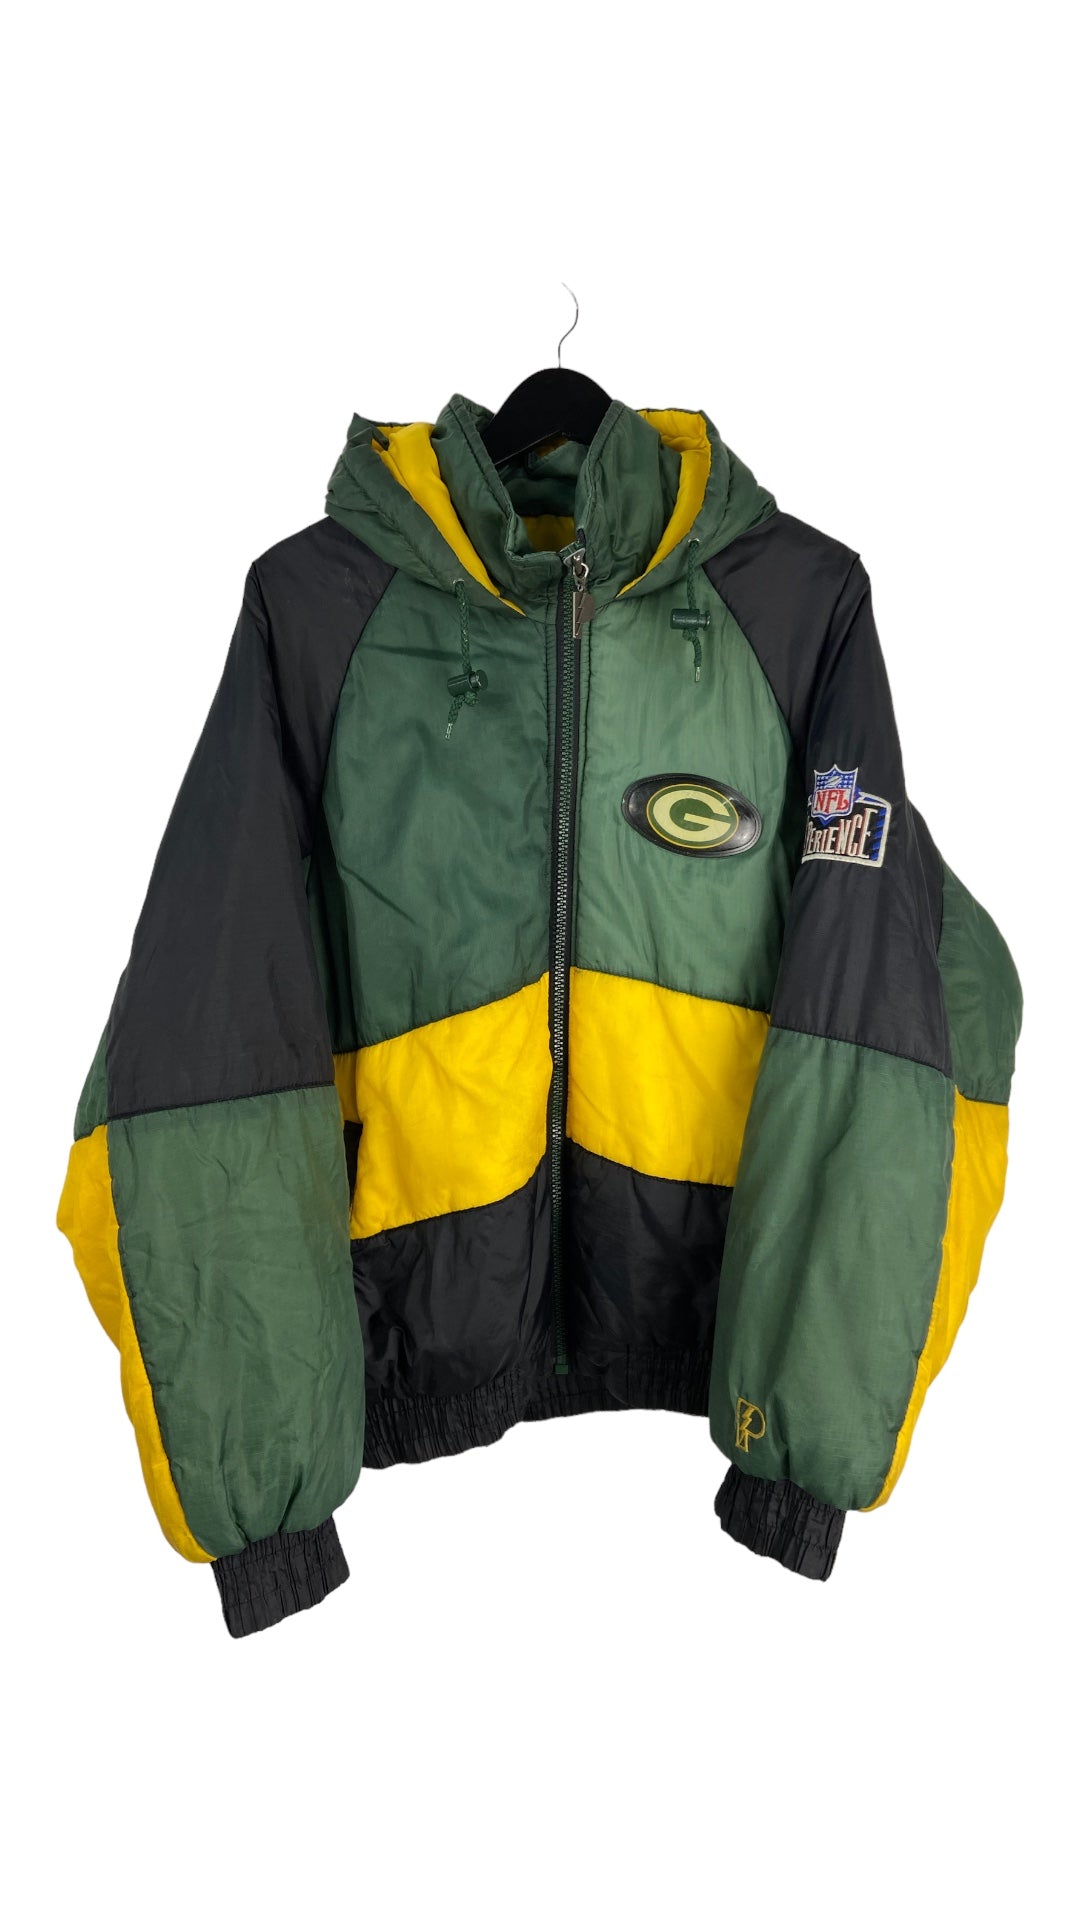 VTG Green Bay Packers Pro Player Jacket Sz M